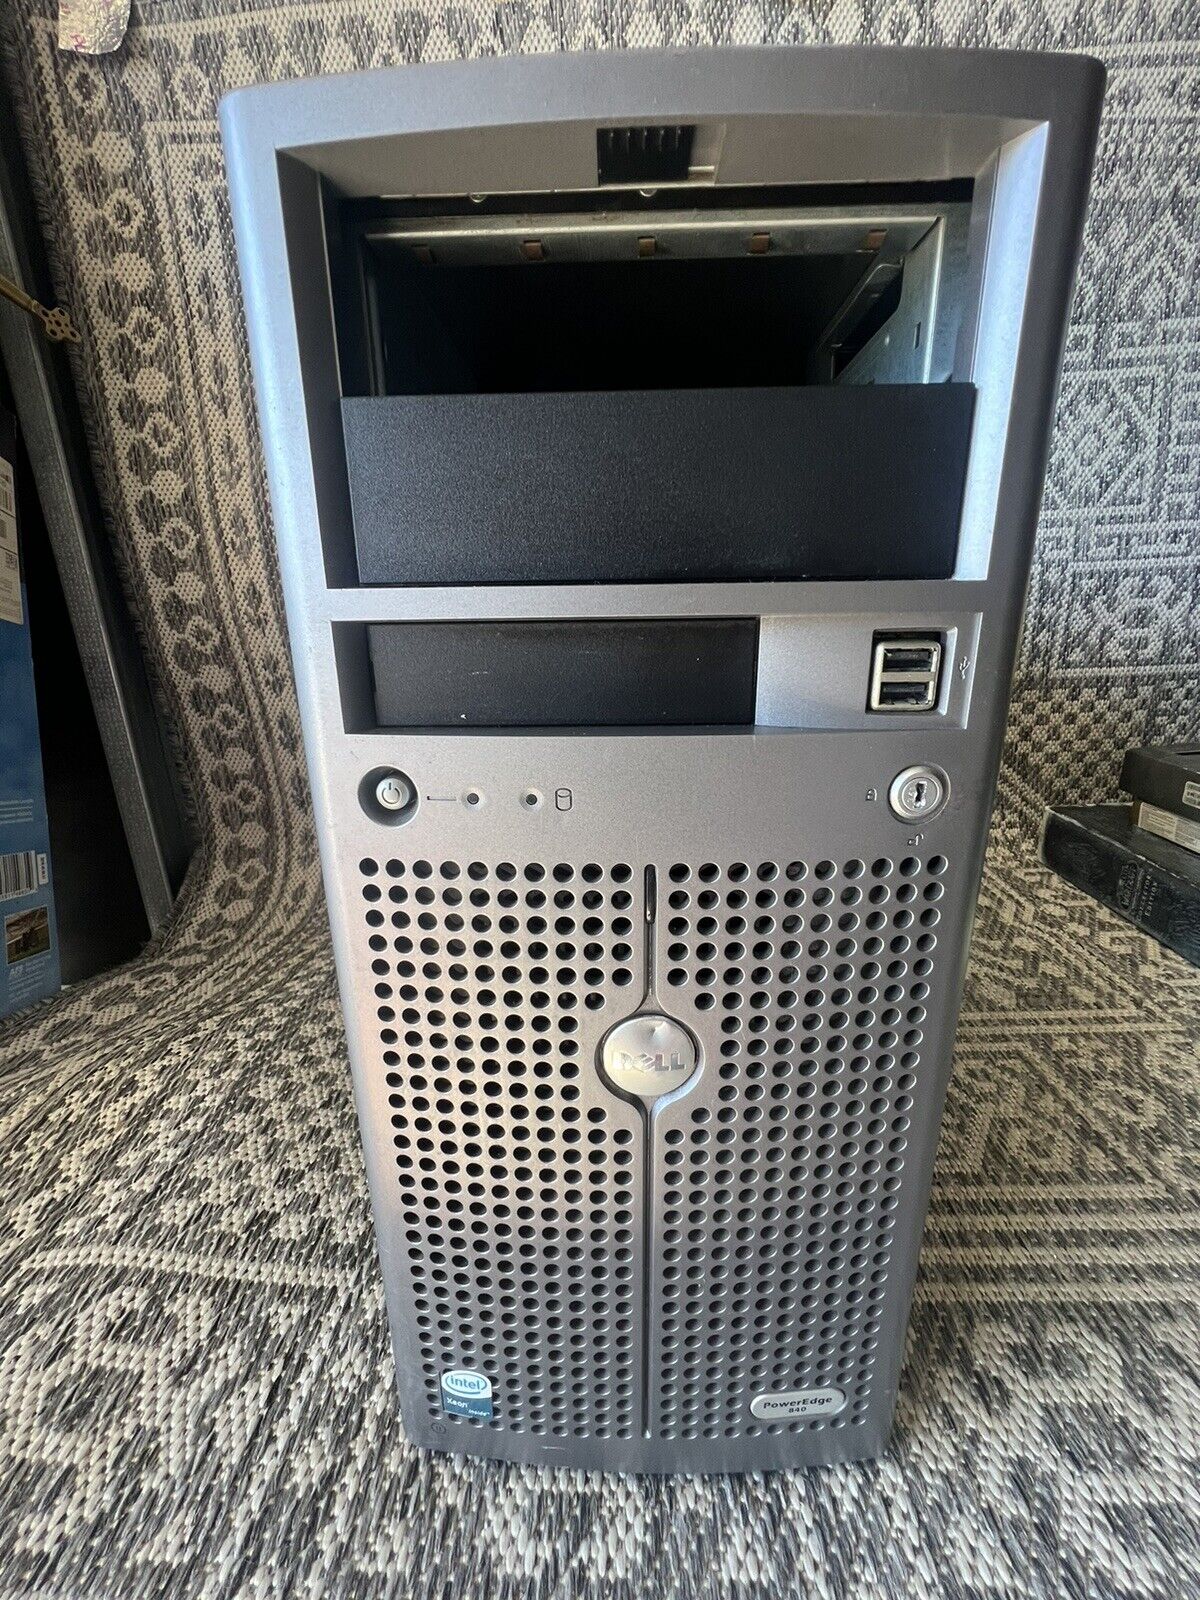 Dell PowerEdge 840 Desktop Computer 20in Black/Gray Intel Pentium D CPU MVT01